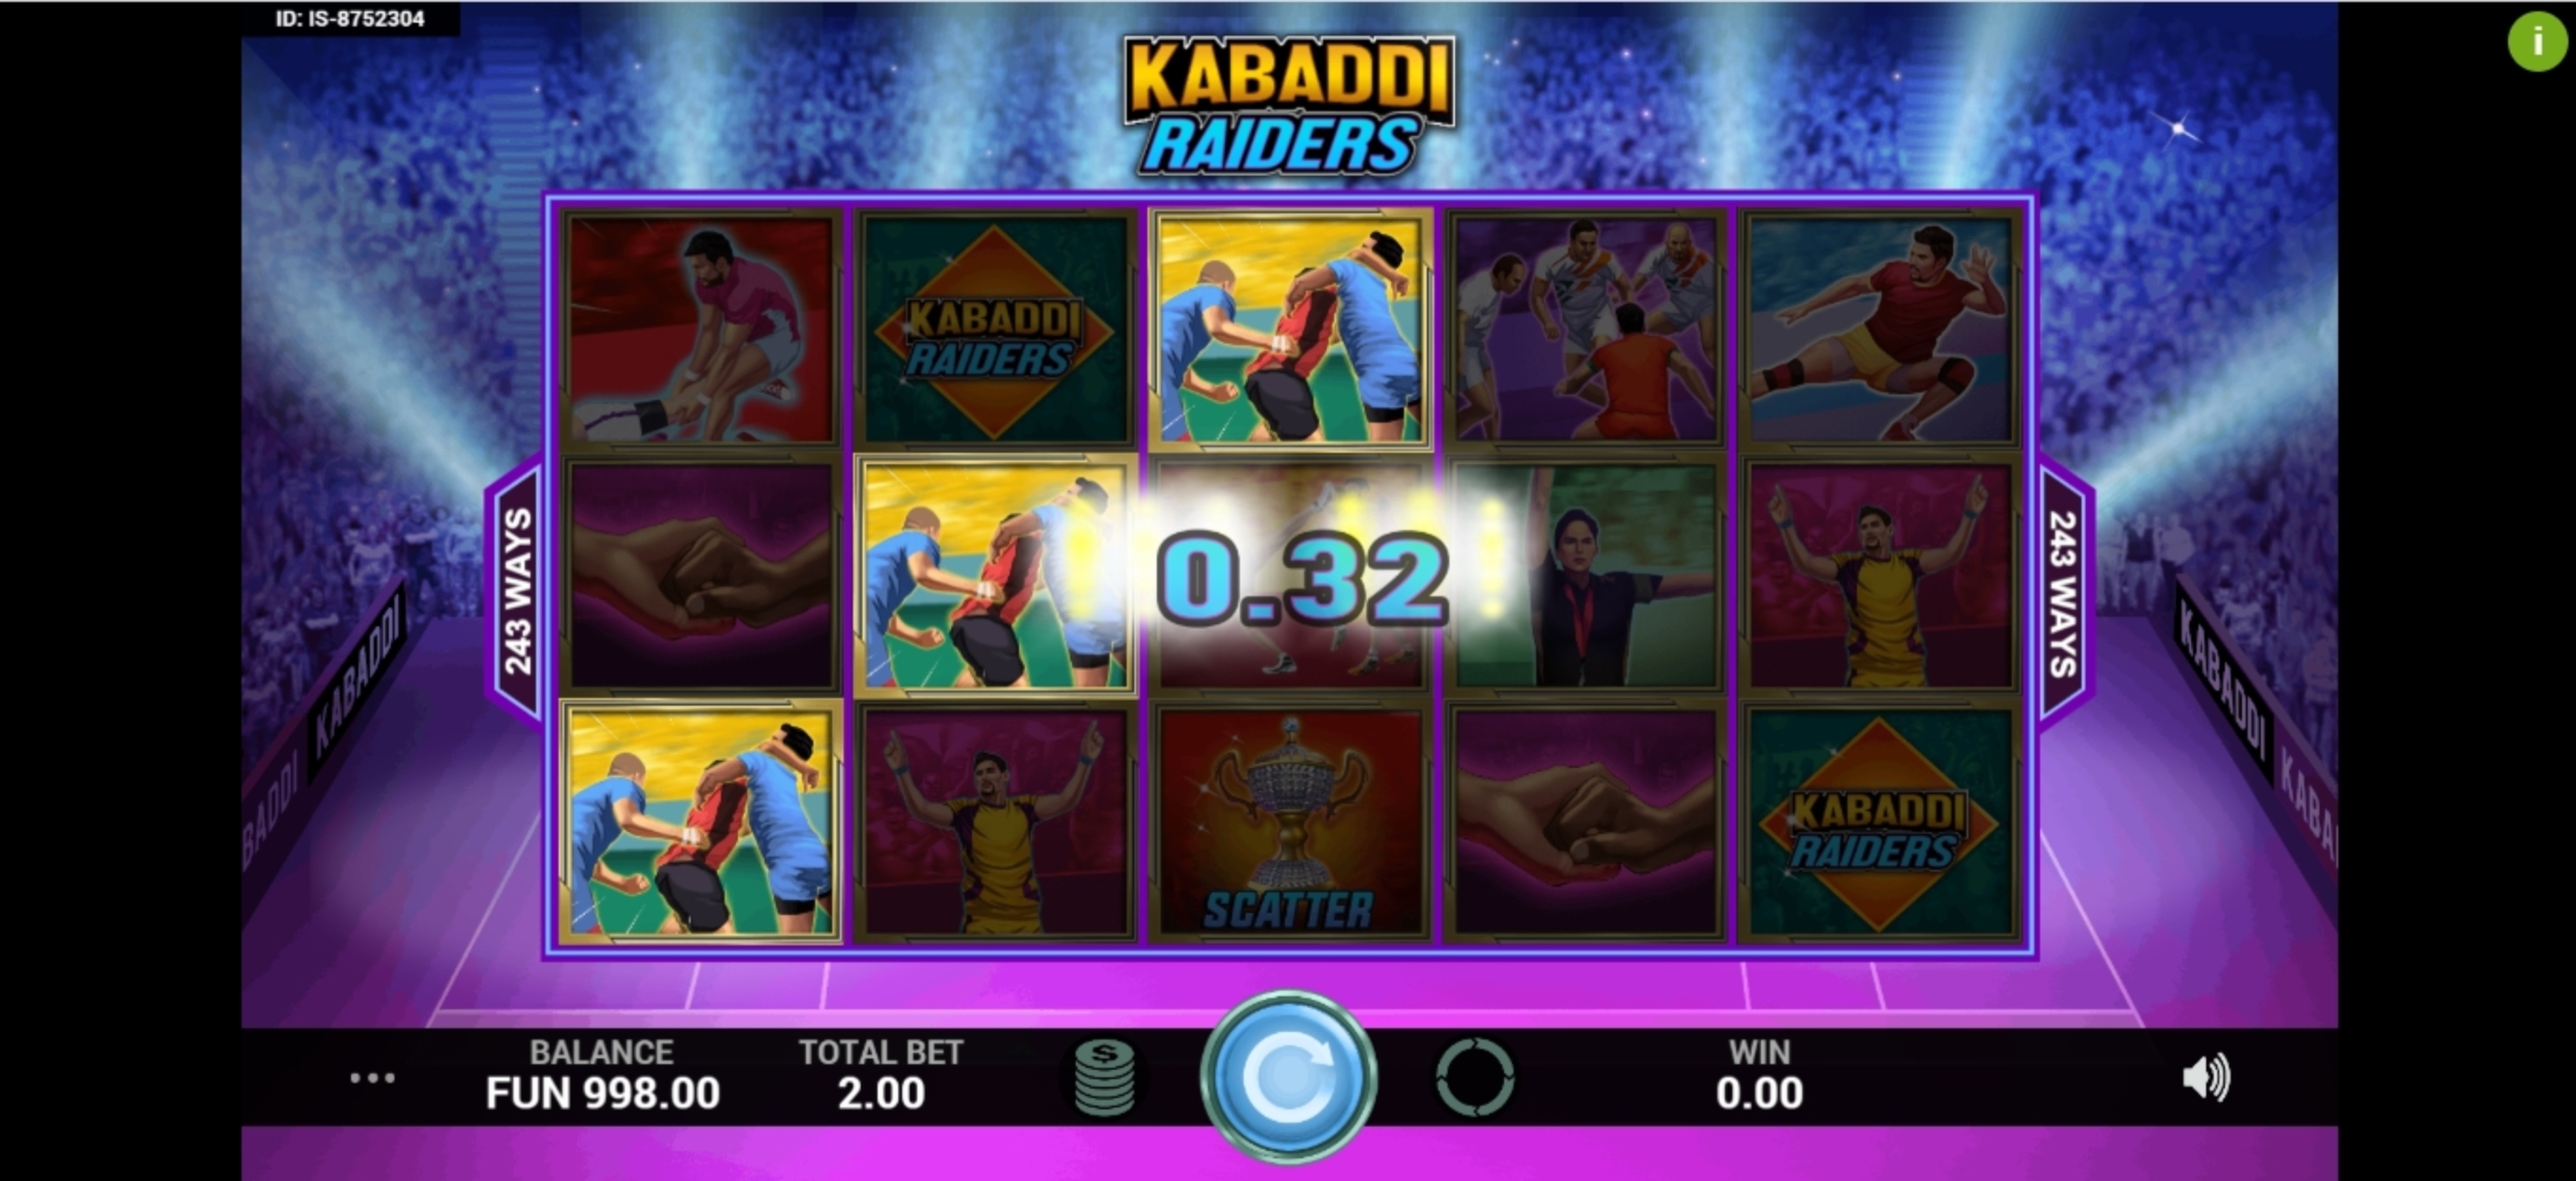 Win Money in Kabaddi Raiders Free Slot Game by Indi Slots